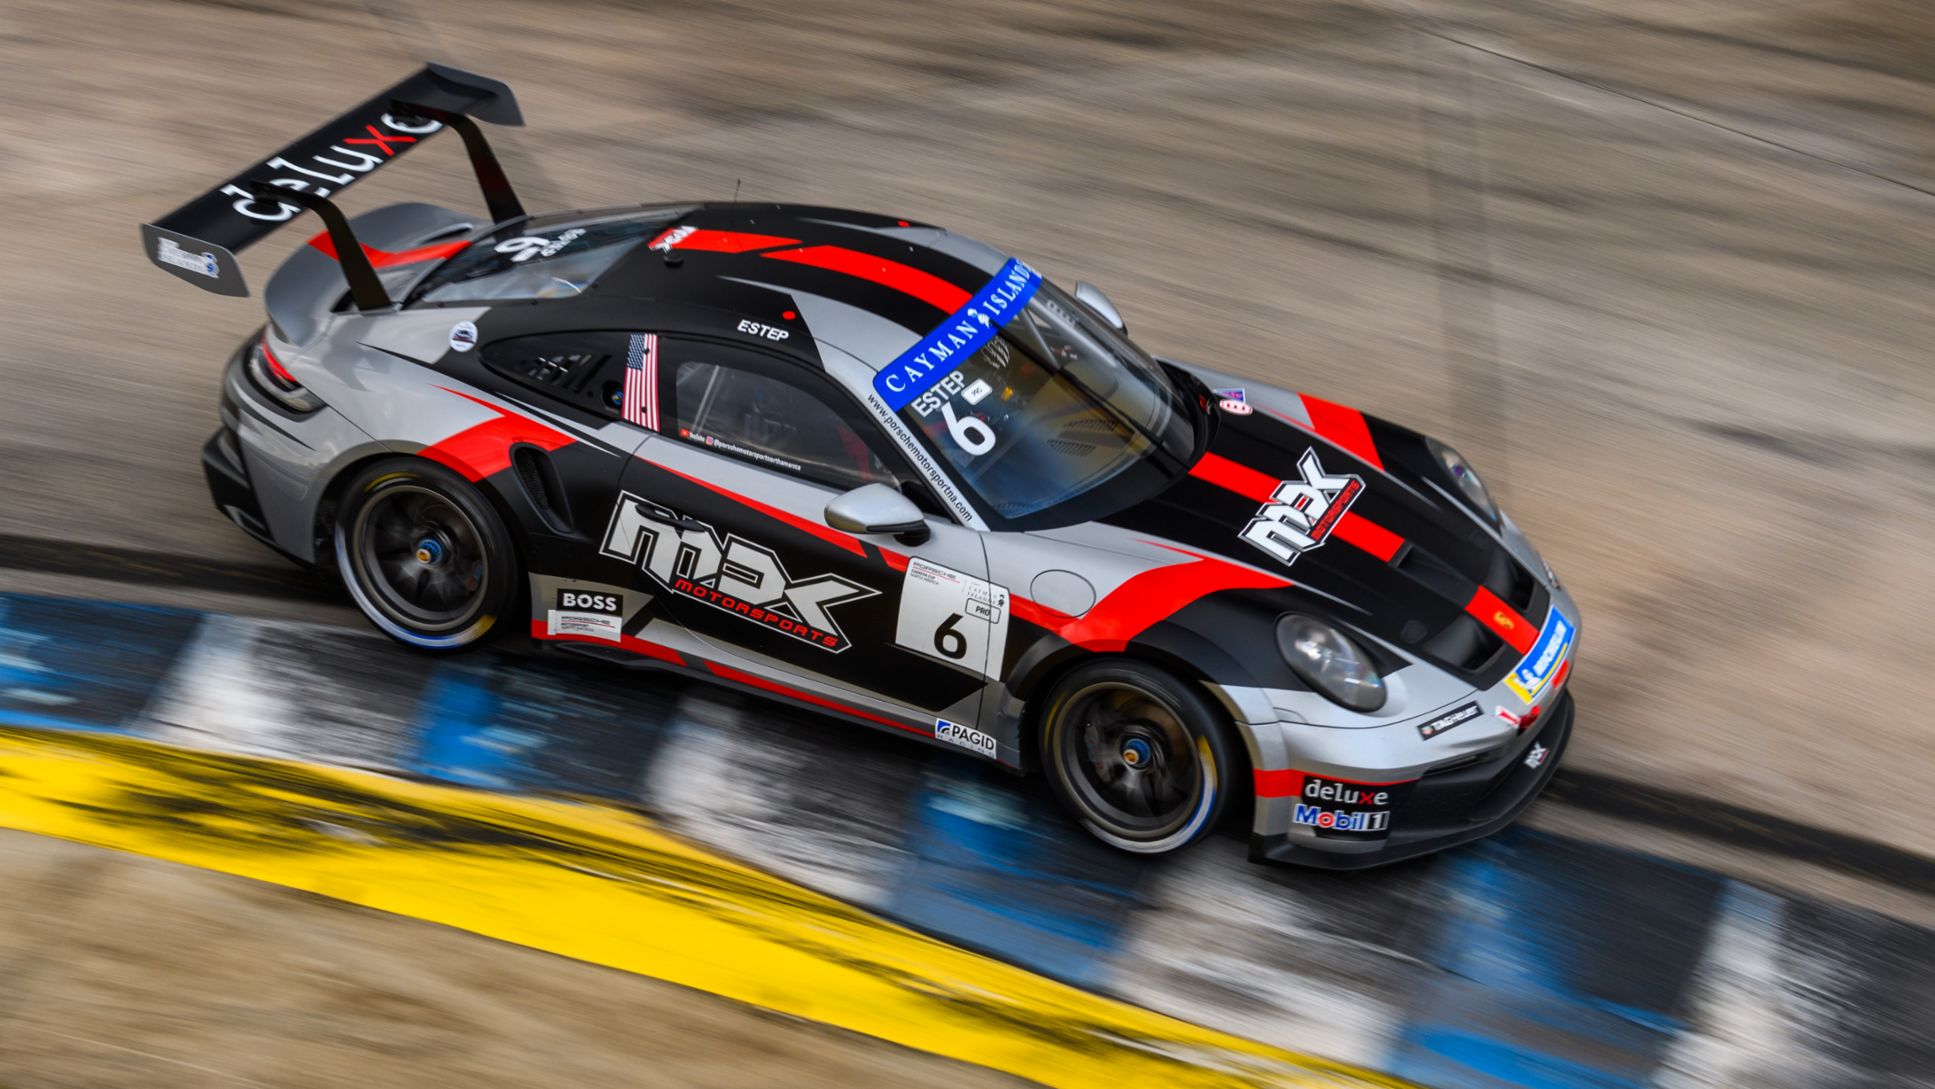 No. 43 MDK Motorsports - Trenton Estep (USA) - Practice, Sebring, 911 GT3 Cup, 2022, PCNA